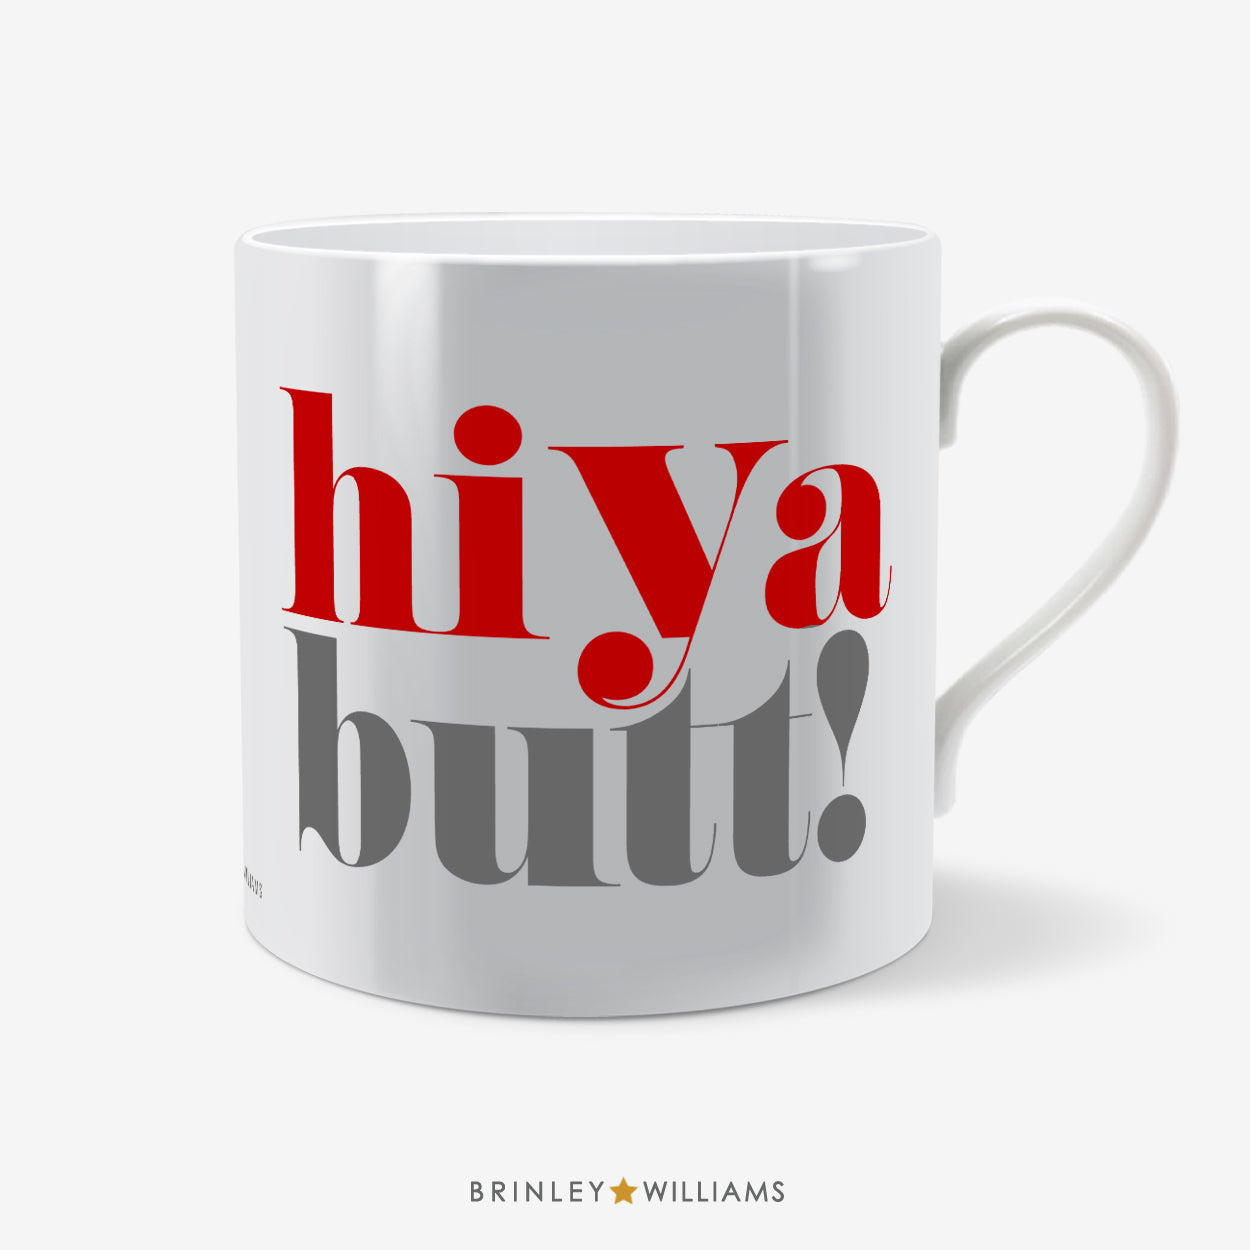 Hiya Butt Welsh Mug - Red